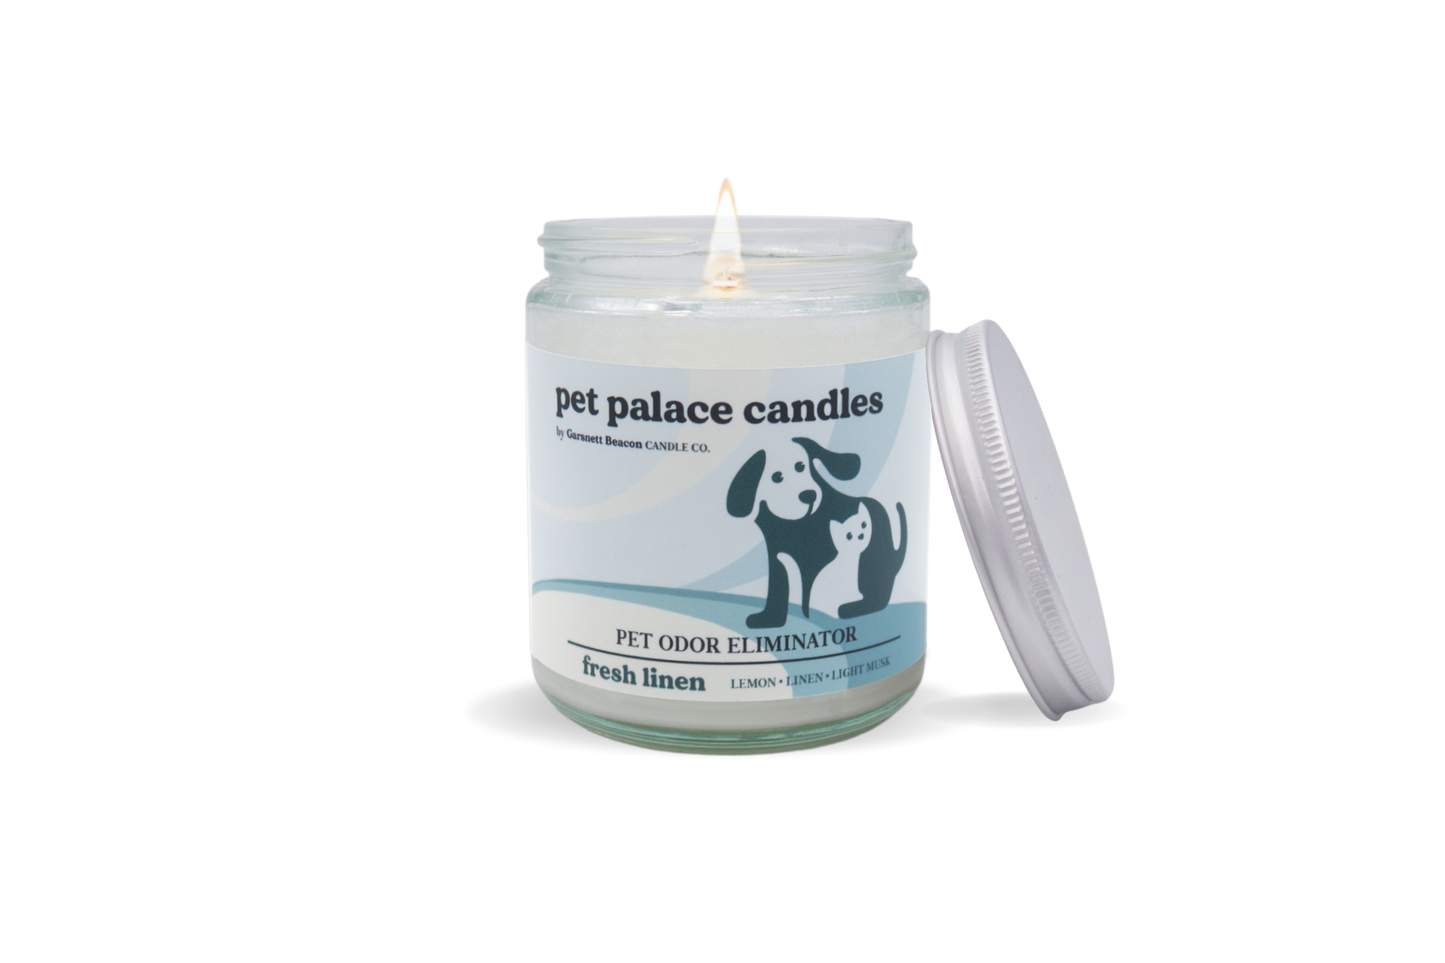 fresh linen pet odor eliminator candle by garsnett beacon candle co.